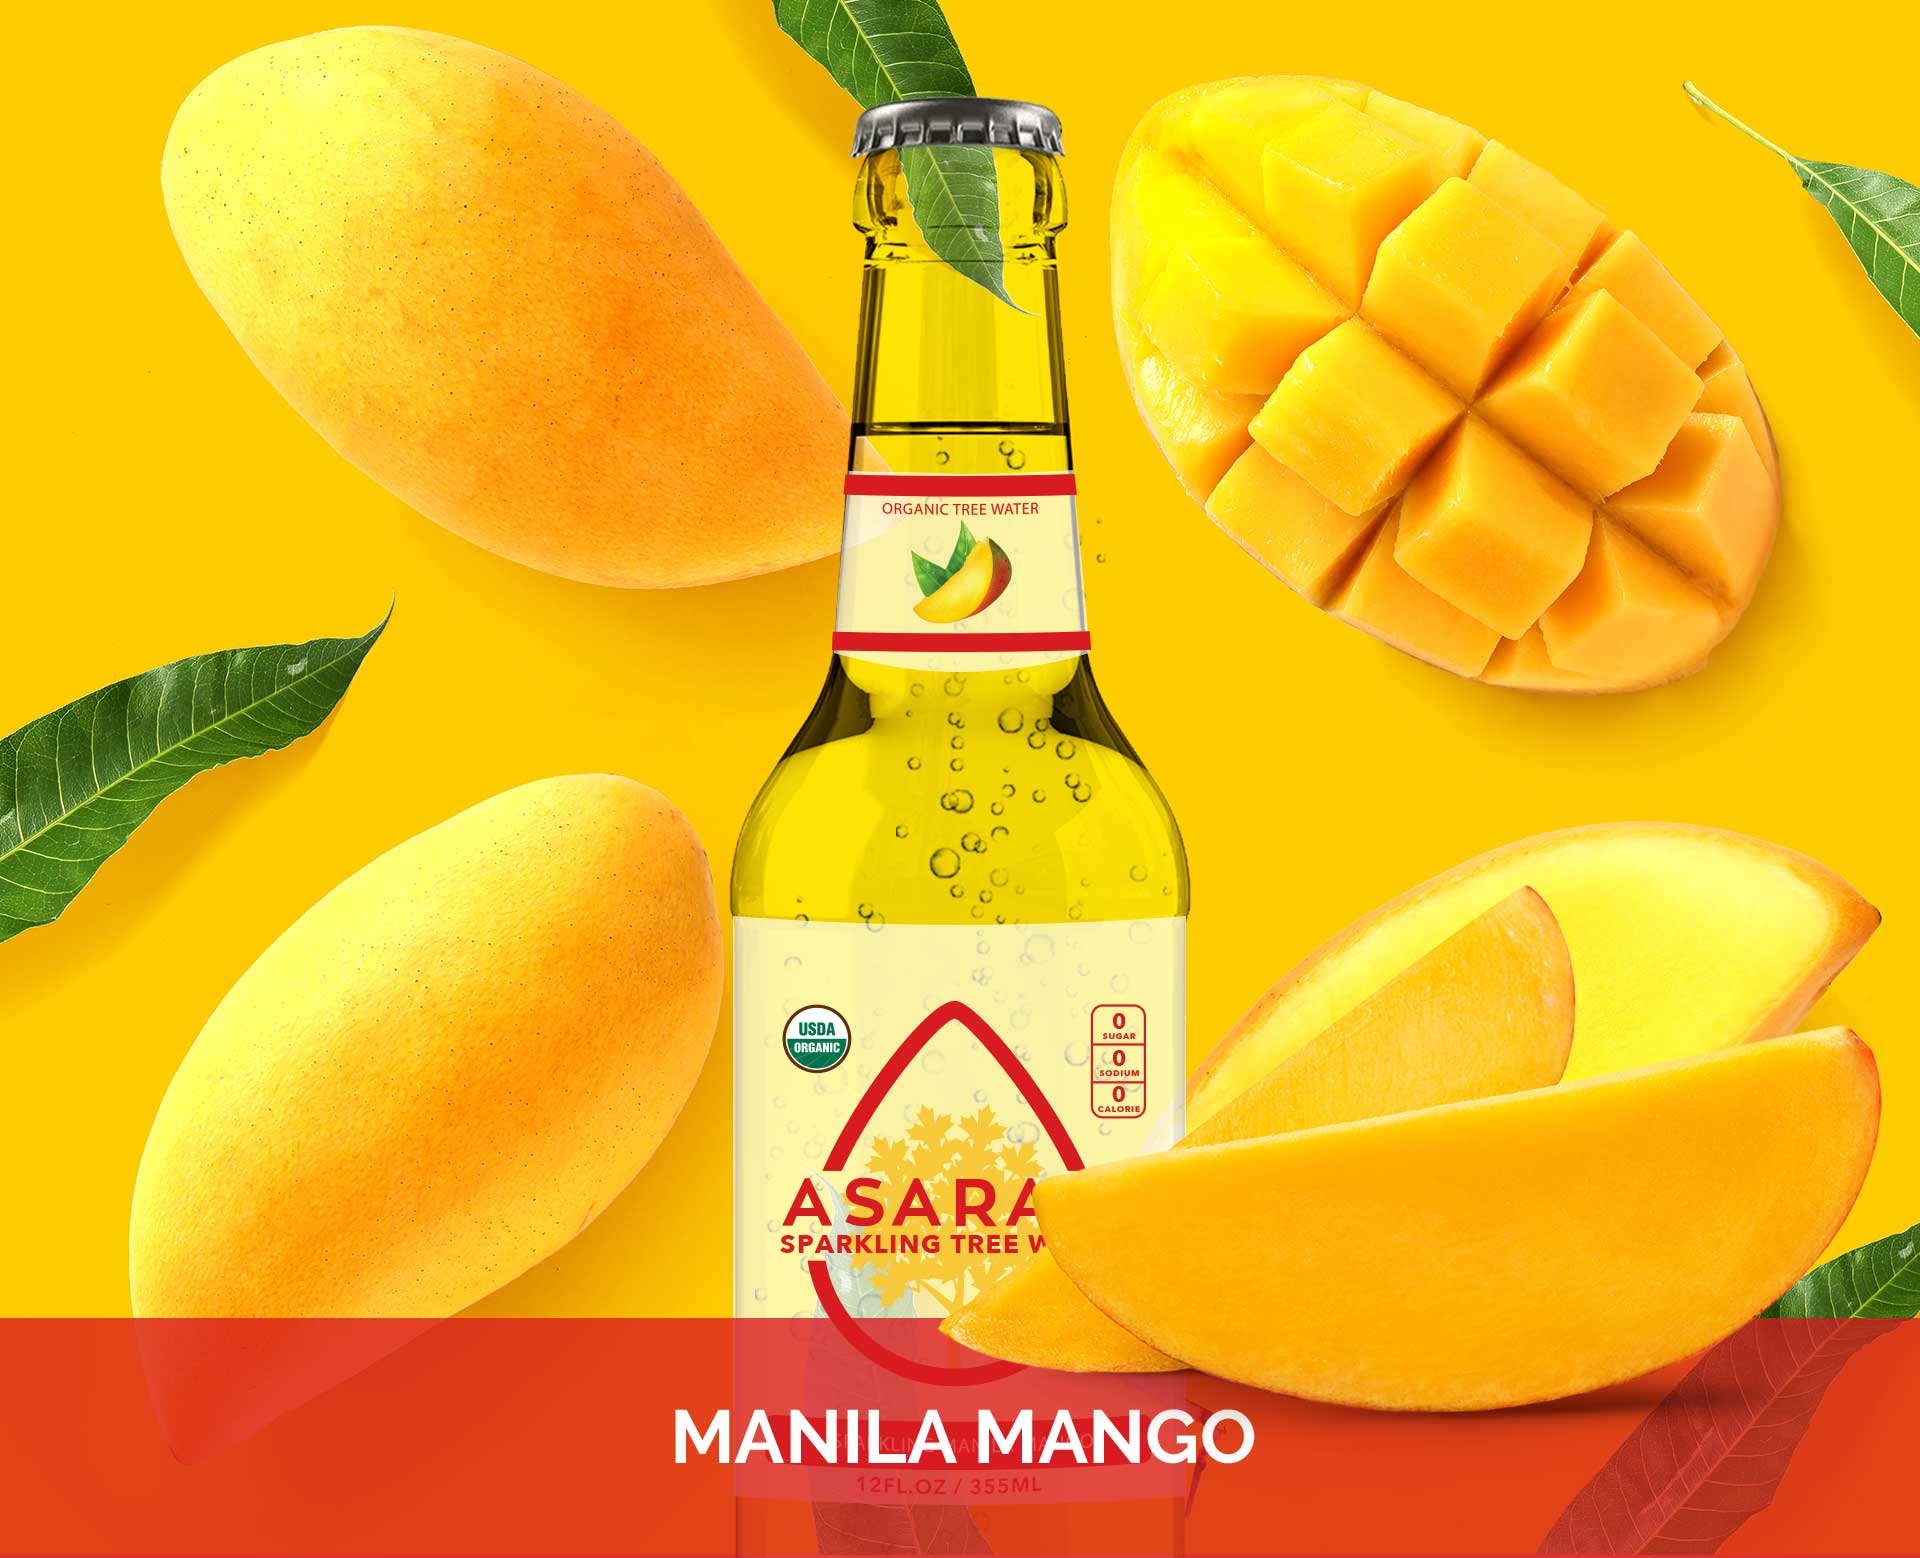 Manila Mango